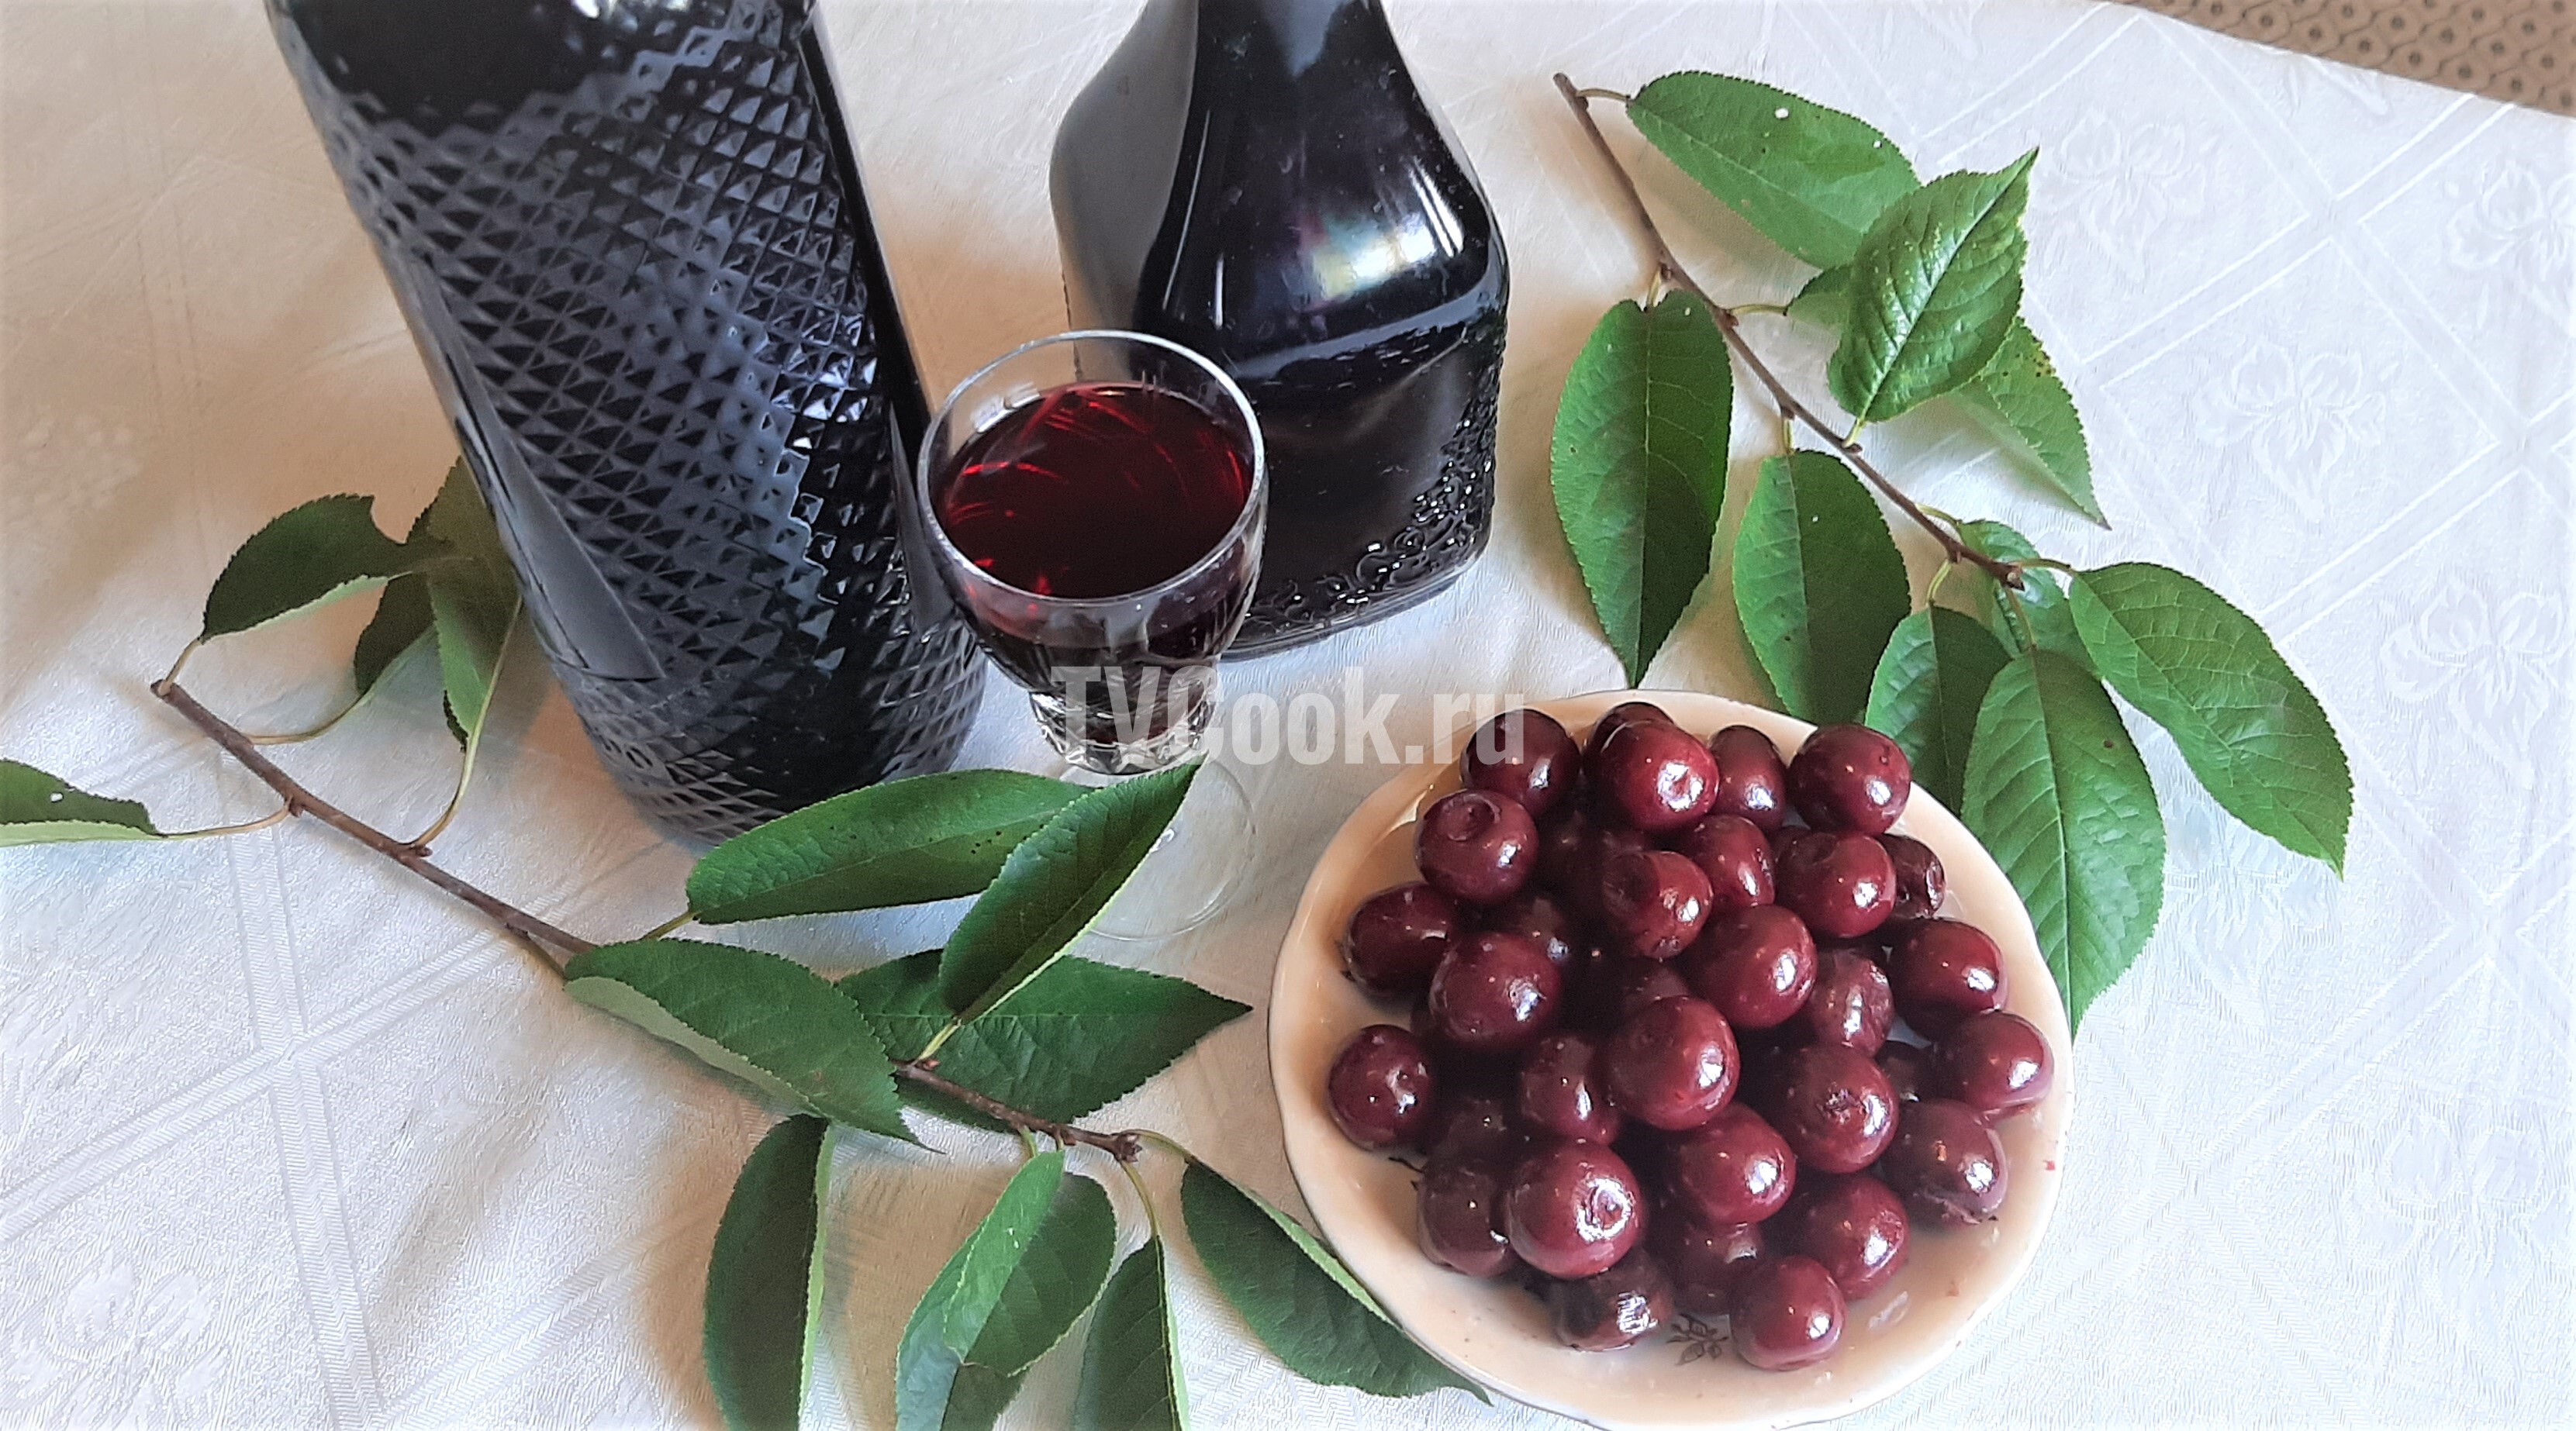 Настойка вишни на водке "Вишневочка" — пошаговый рецепт с фото и видео